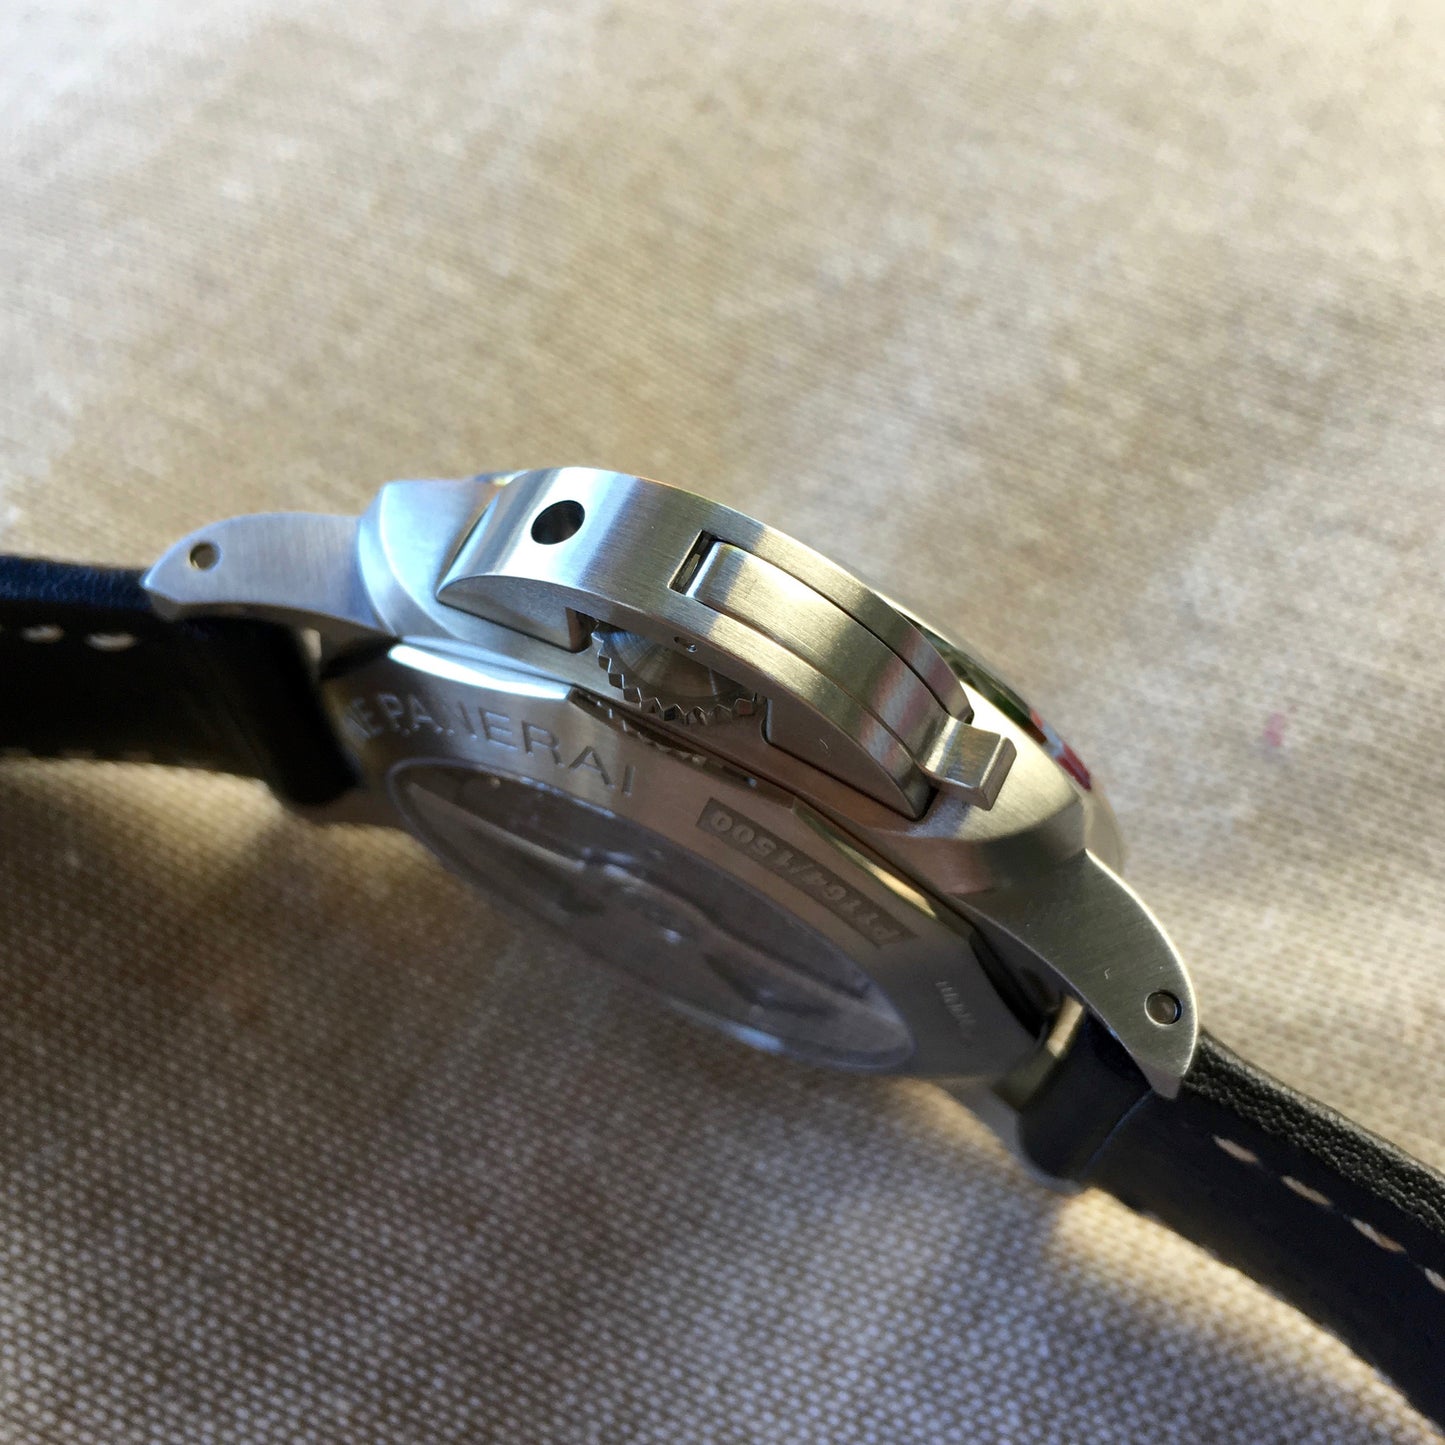 Panerai Luminor Flyback PAM 524 1950 3 Days Chronograph Automatic Watch - Hashtag Watch Company